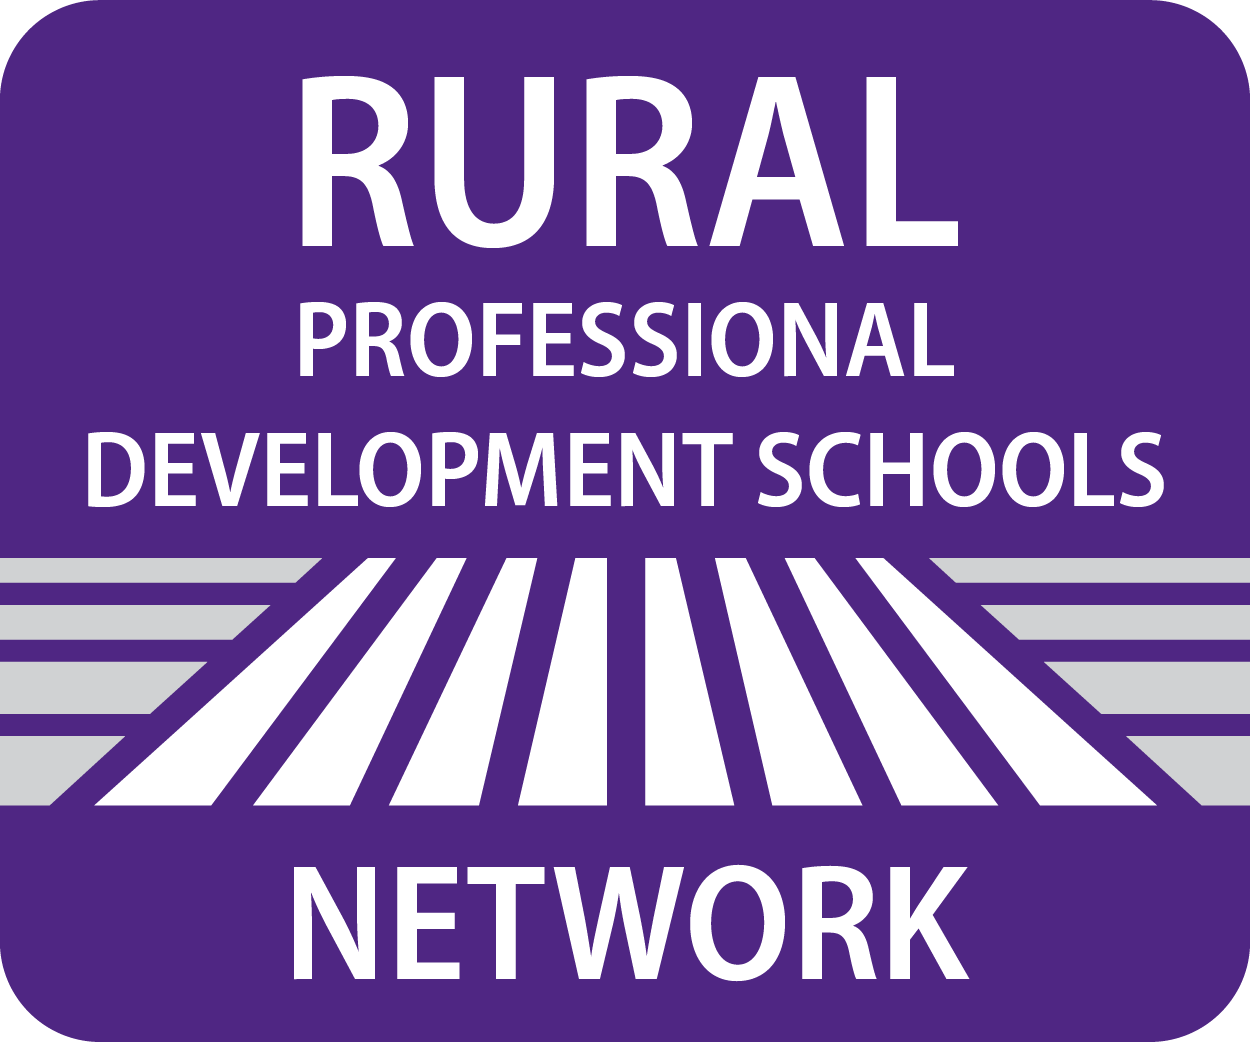 Rural Professional Development School Network button